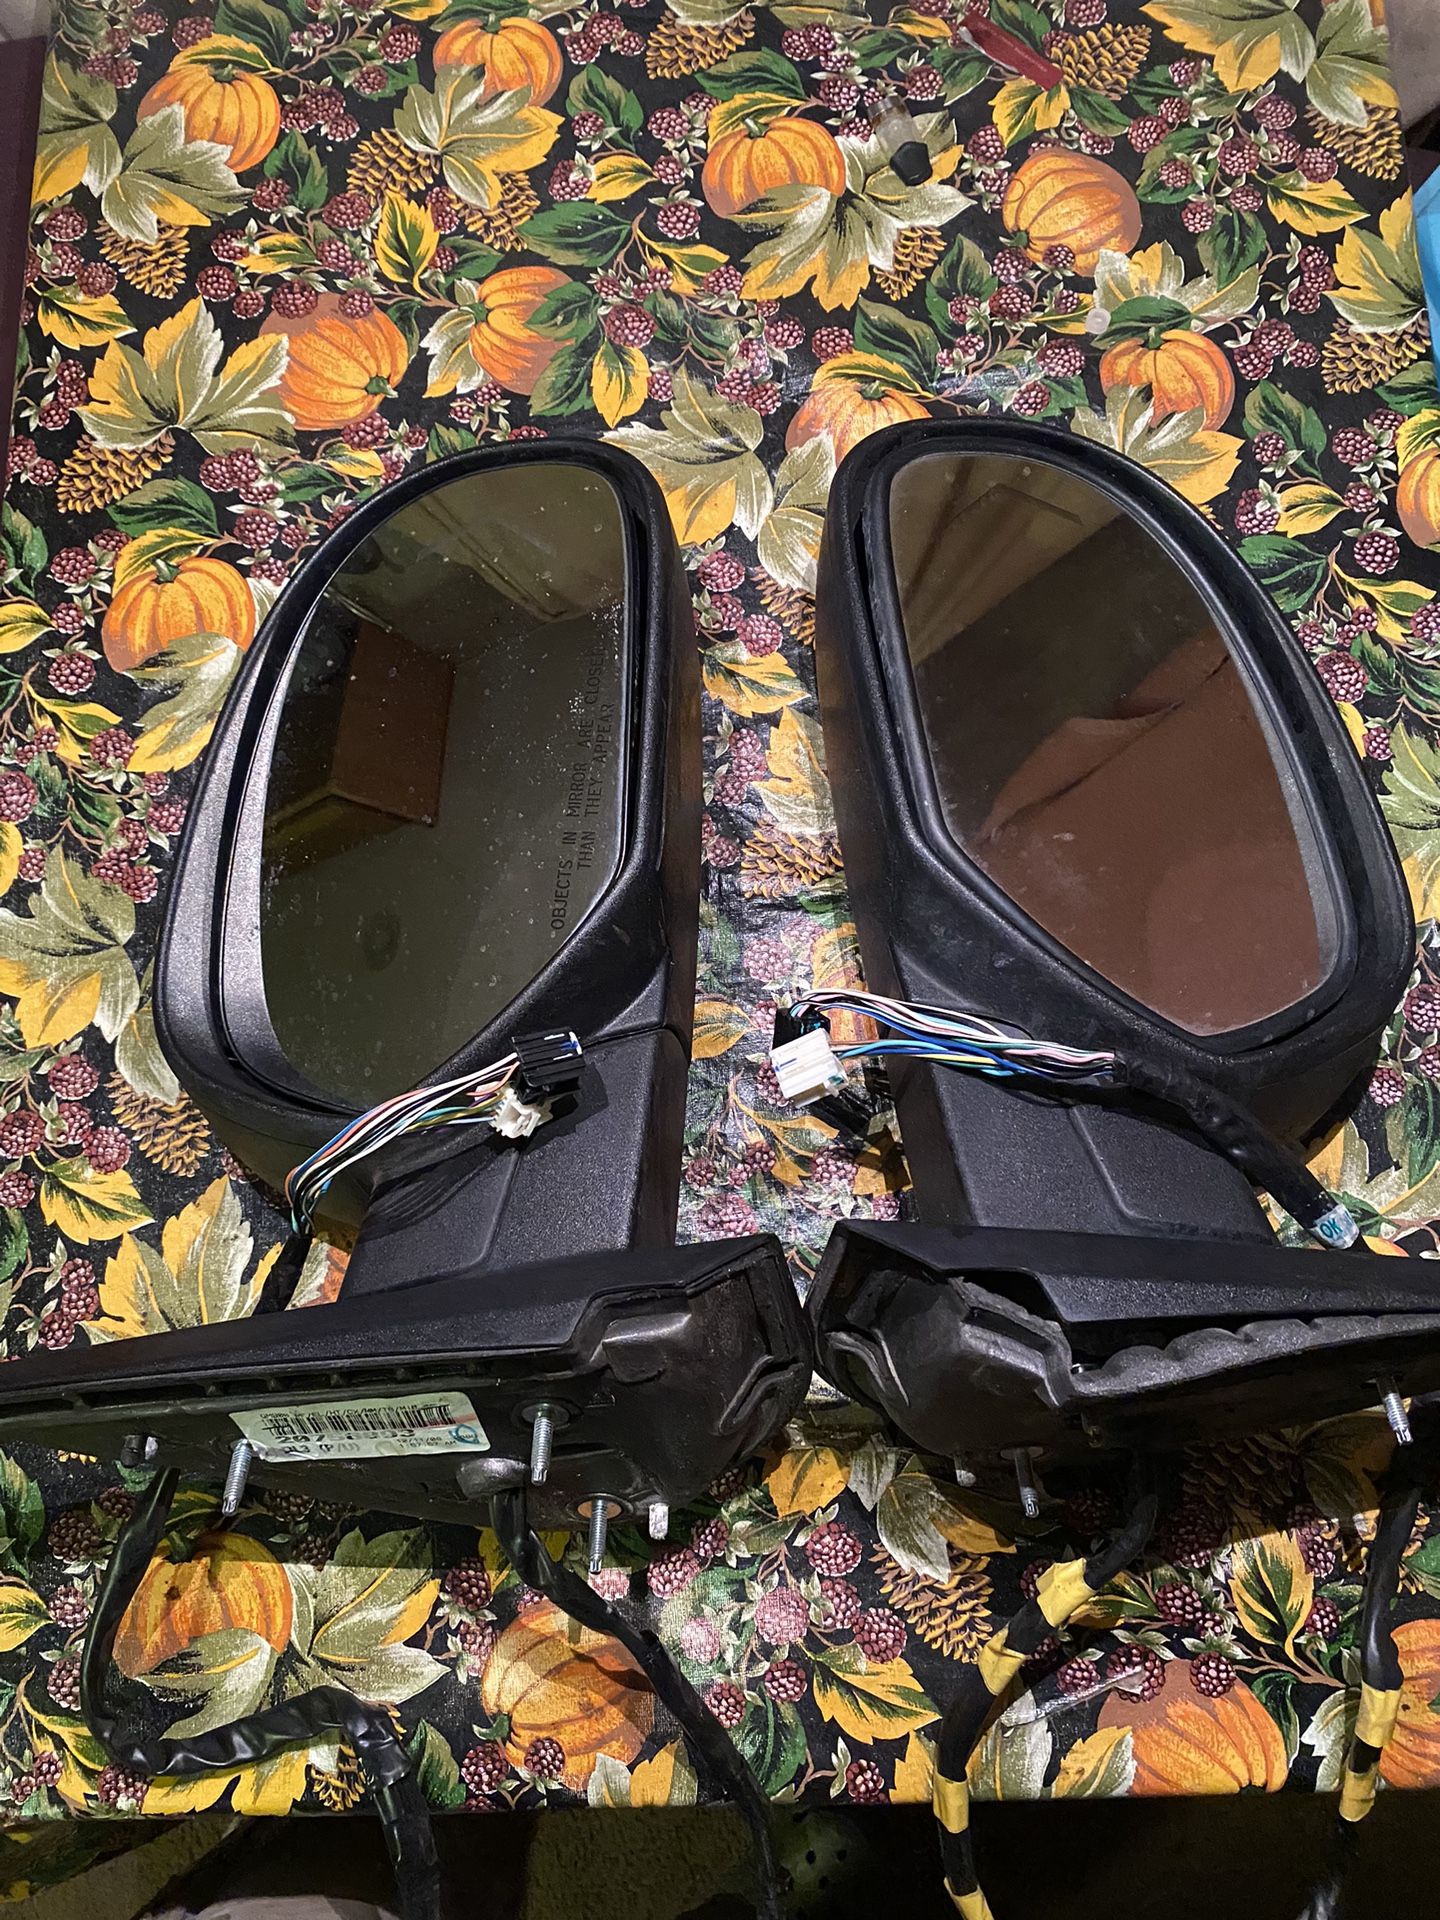 07-13 Chevy Silverado Mirrors